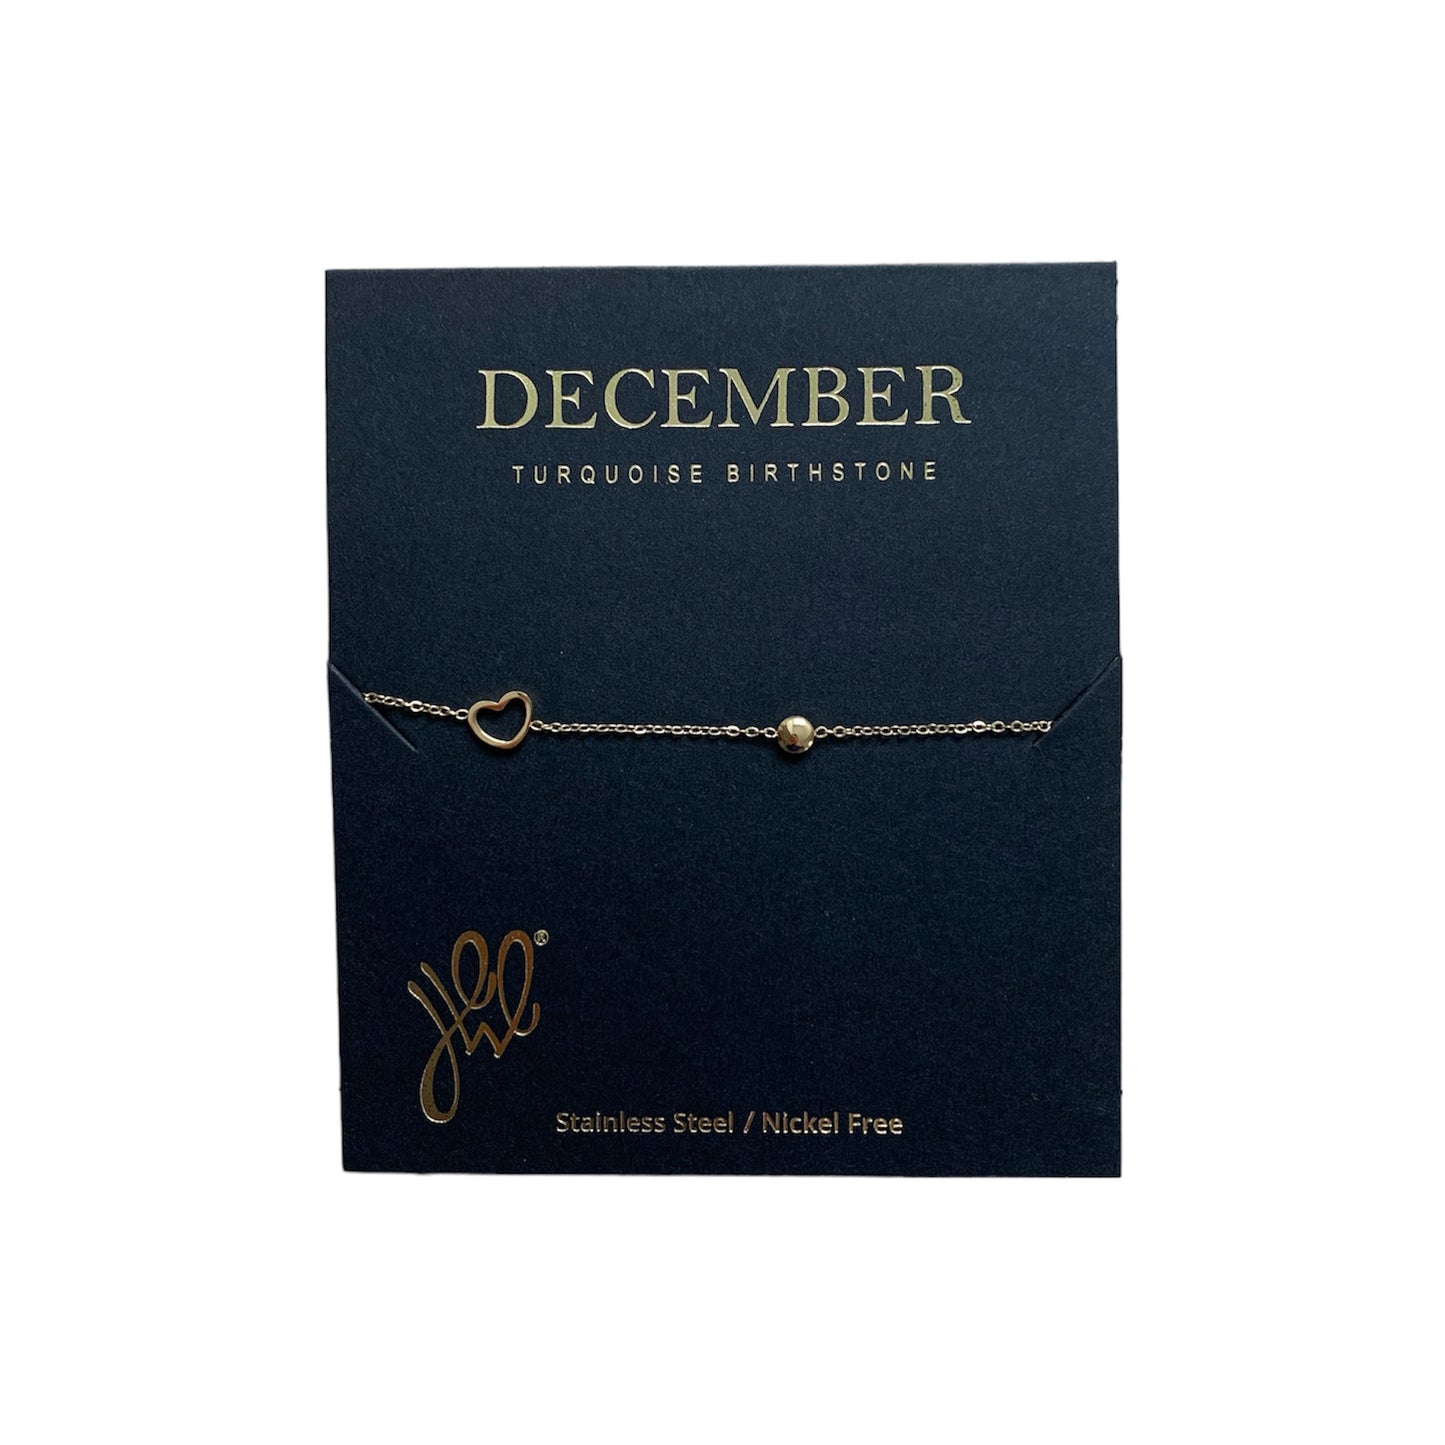 Birthstone armband - December